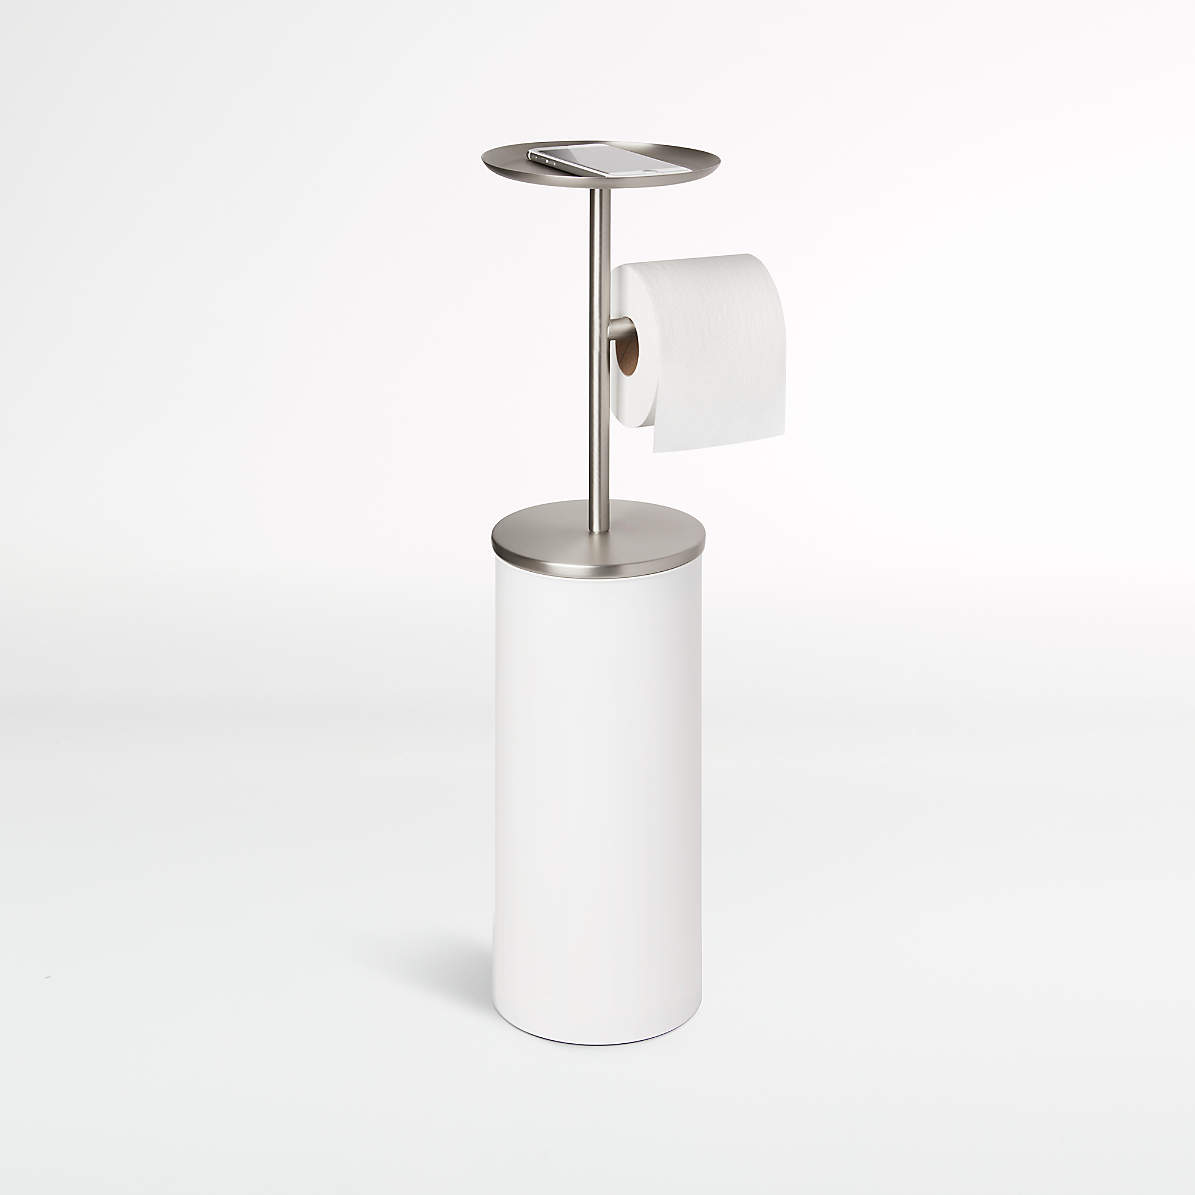 Toilet Paper Holder Stand with Reserve and Dispenser for 4 Mega Roll, –  KeFanta